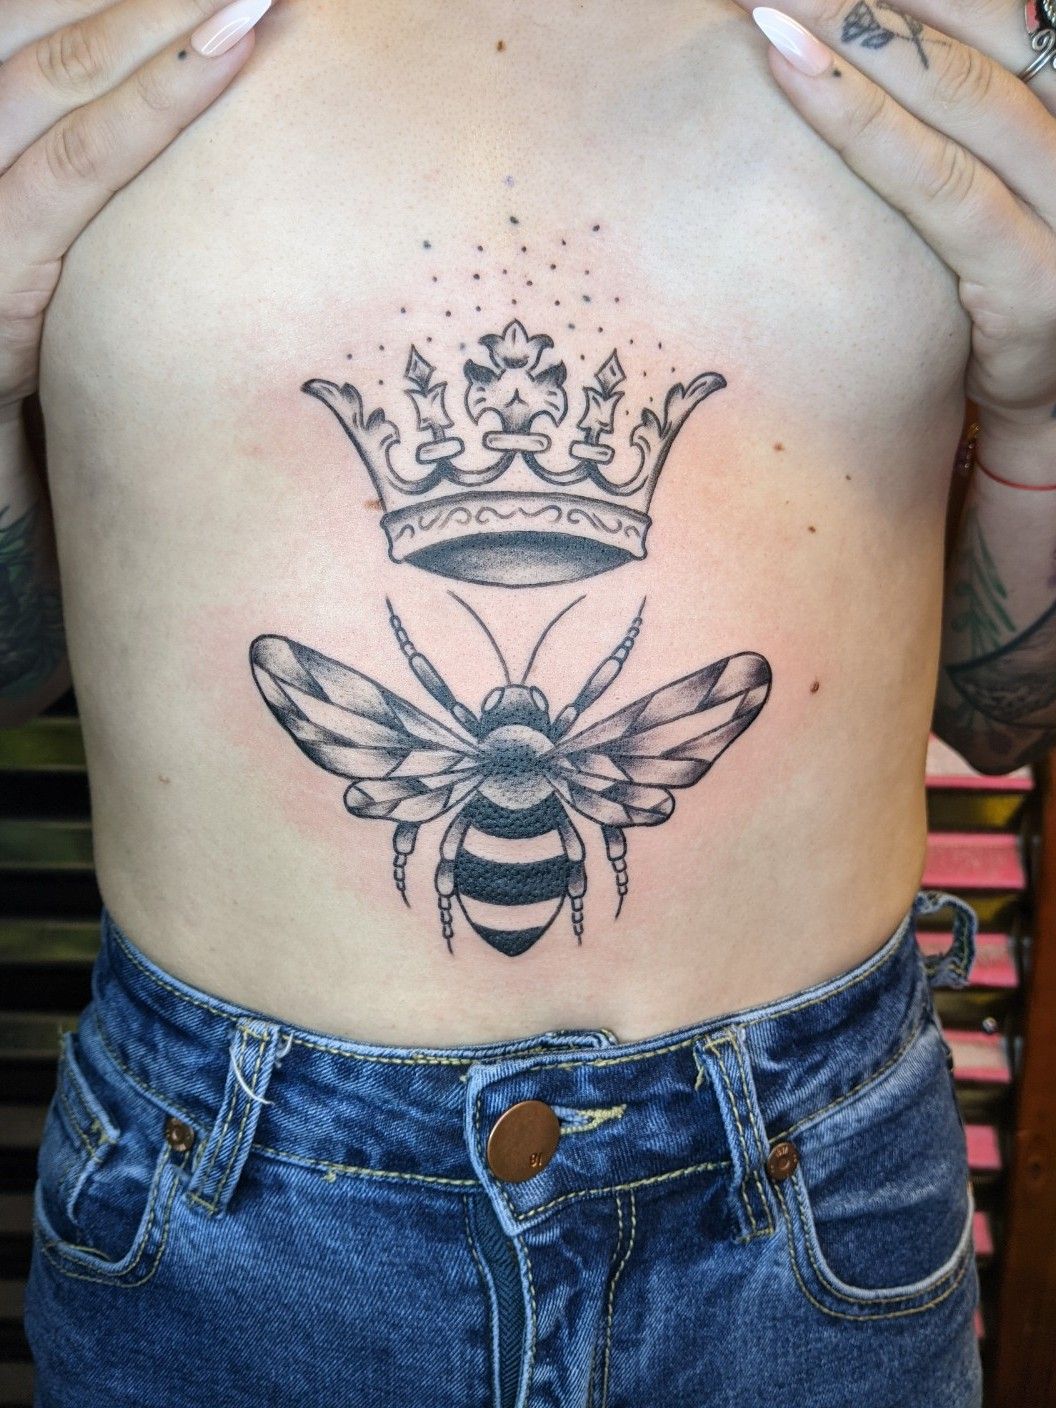 Tattoo uploaded by Kimberley Ann  queen bee queenbee crown girly   Tattoodo